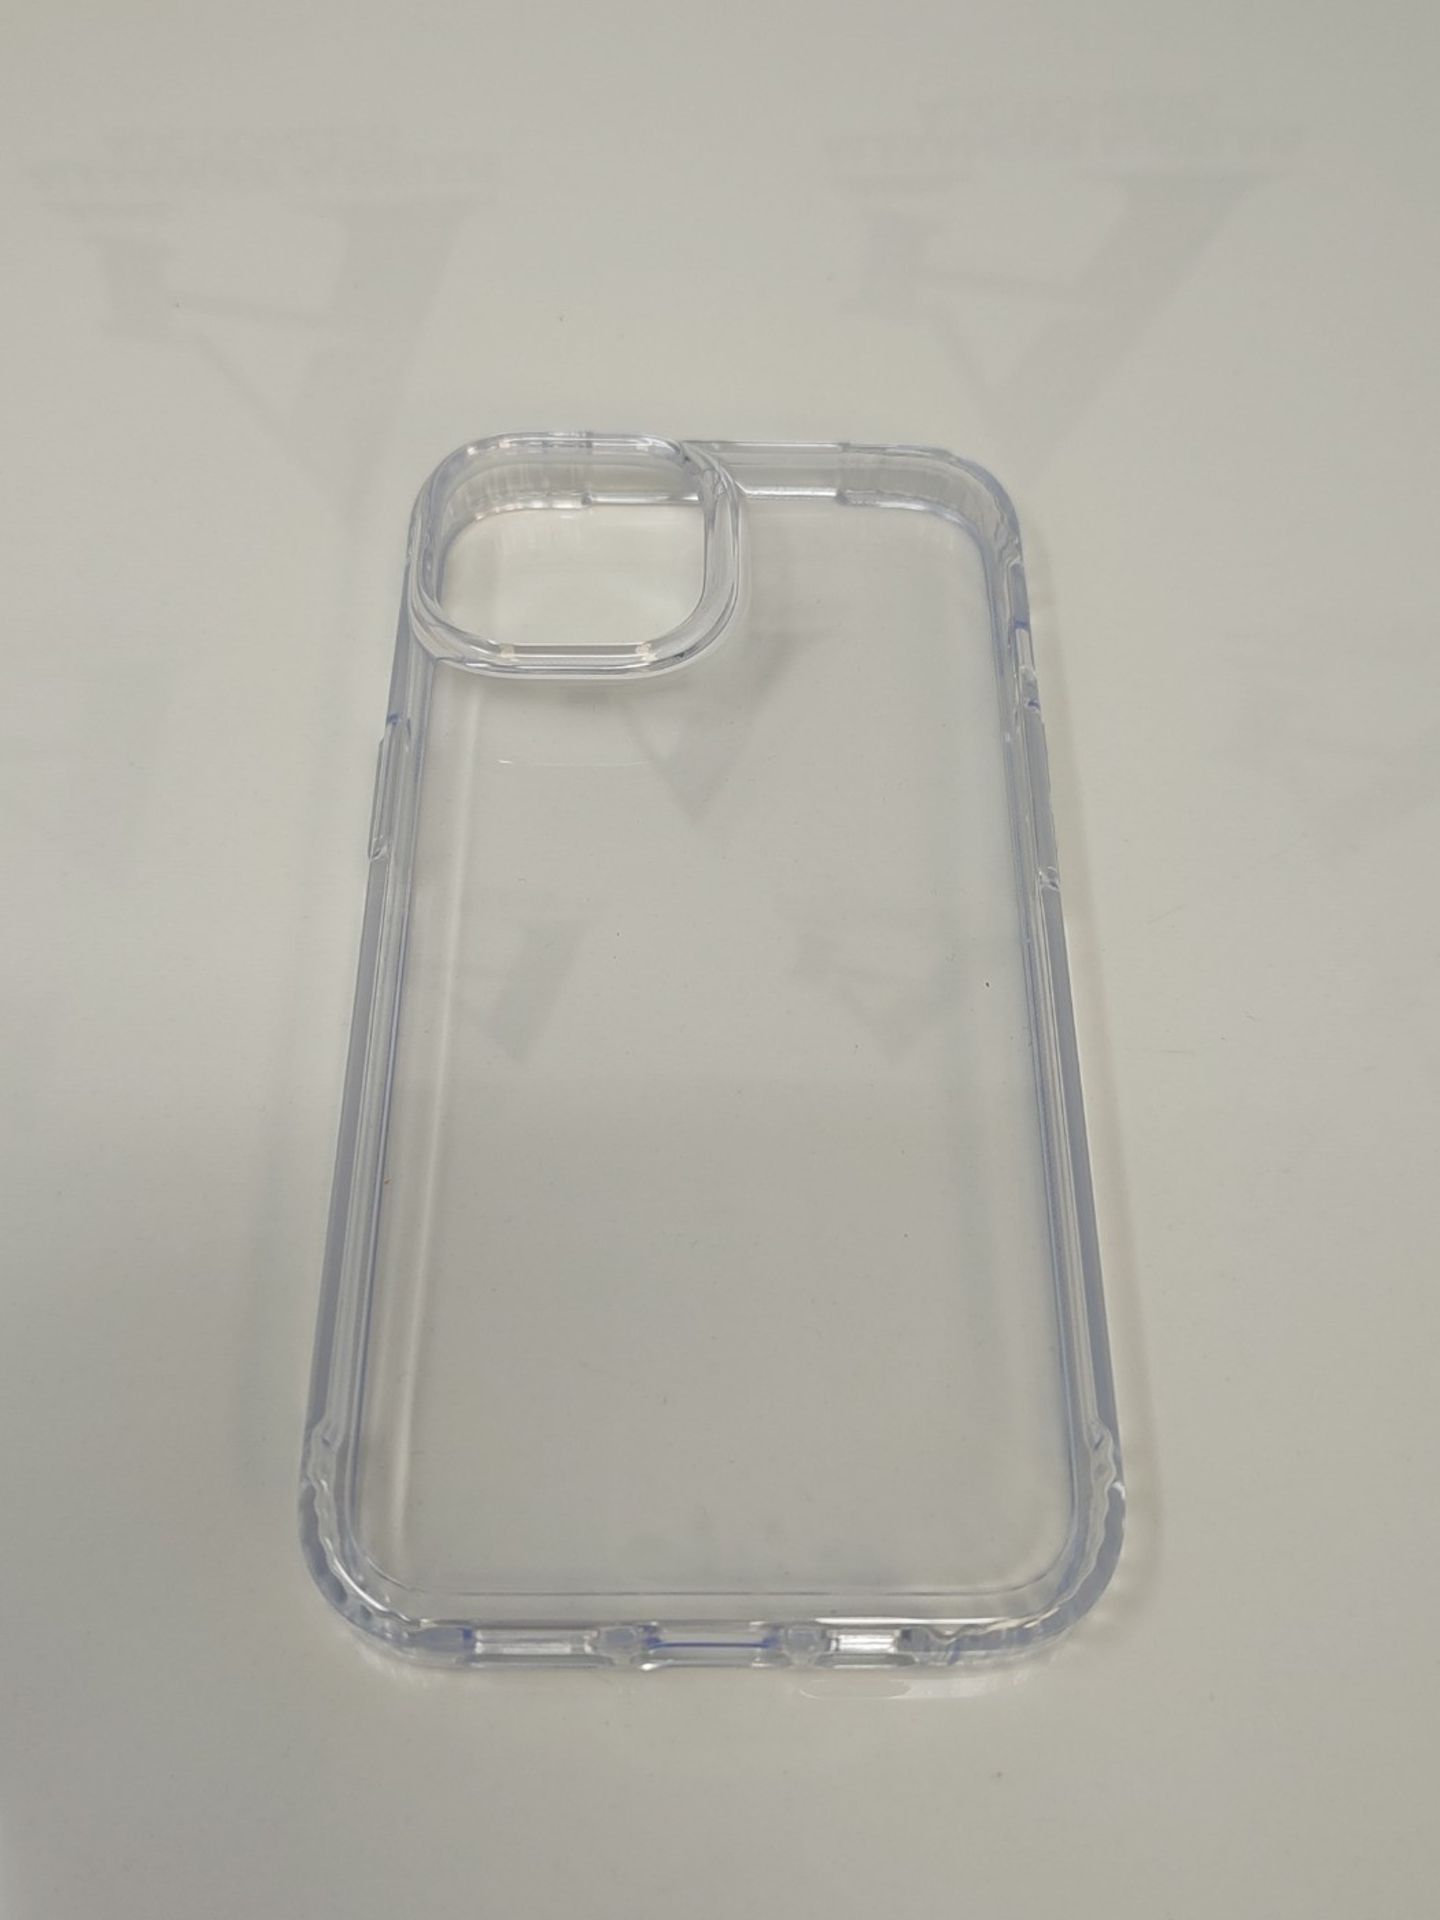 tech21 iPhone 14 Evo Clear  Scratch-Resistant, Shock-Absorbing Clear Phone Case wit - Image 2 of 3